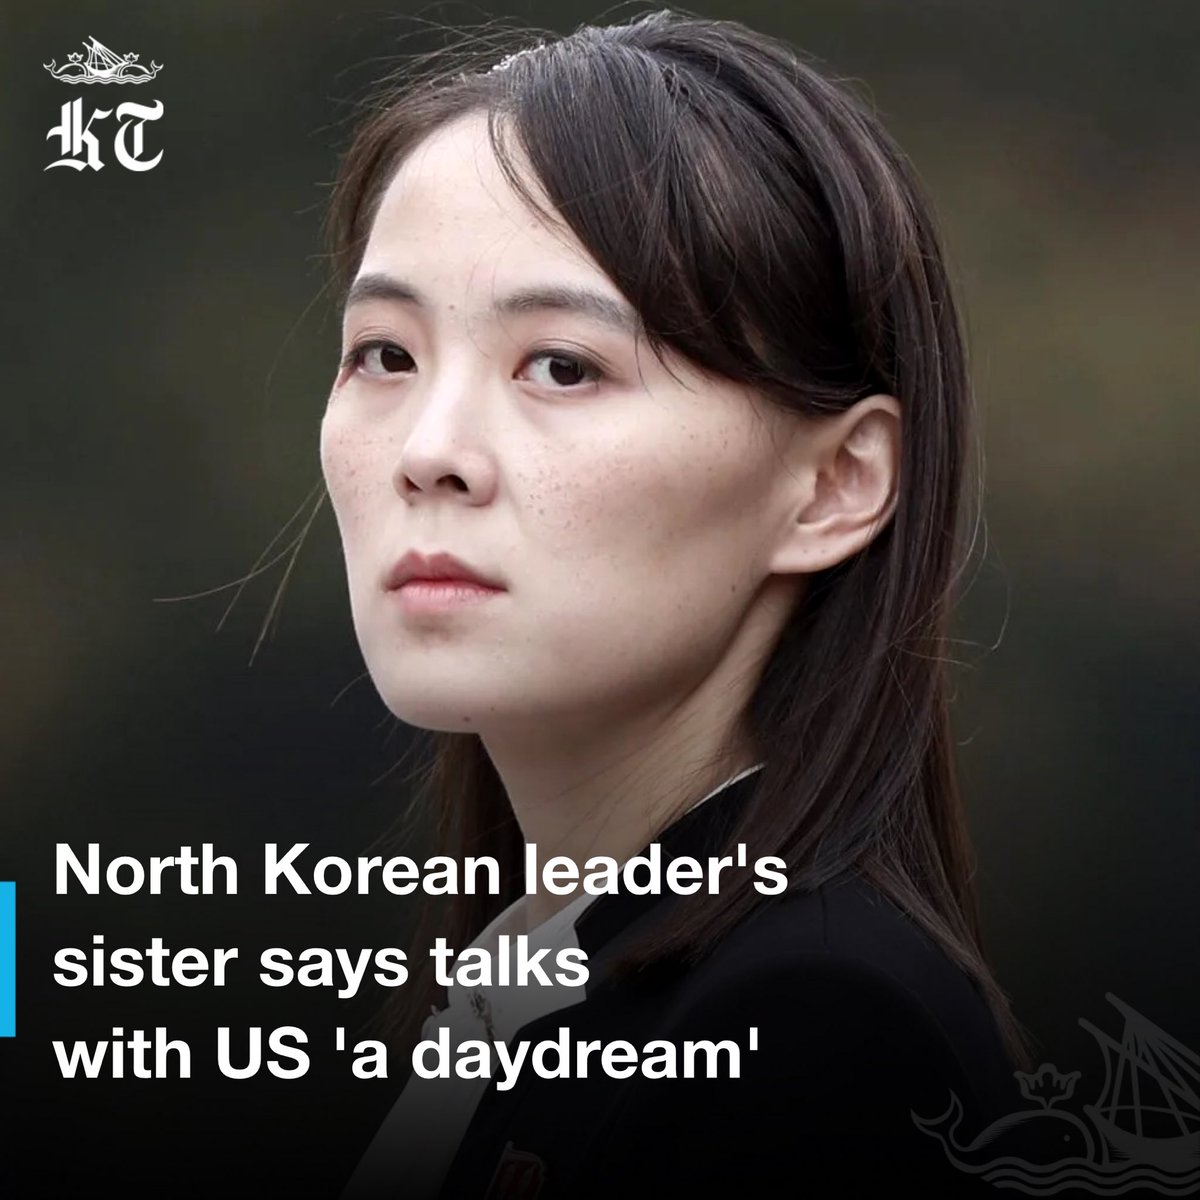 North Korean leader Kim Jong Un's powerful sister Kim Yo Jong dismissed the idea of talks with the #UnitedStates as 